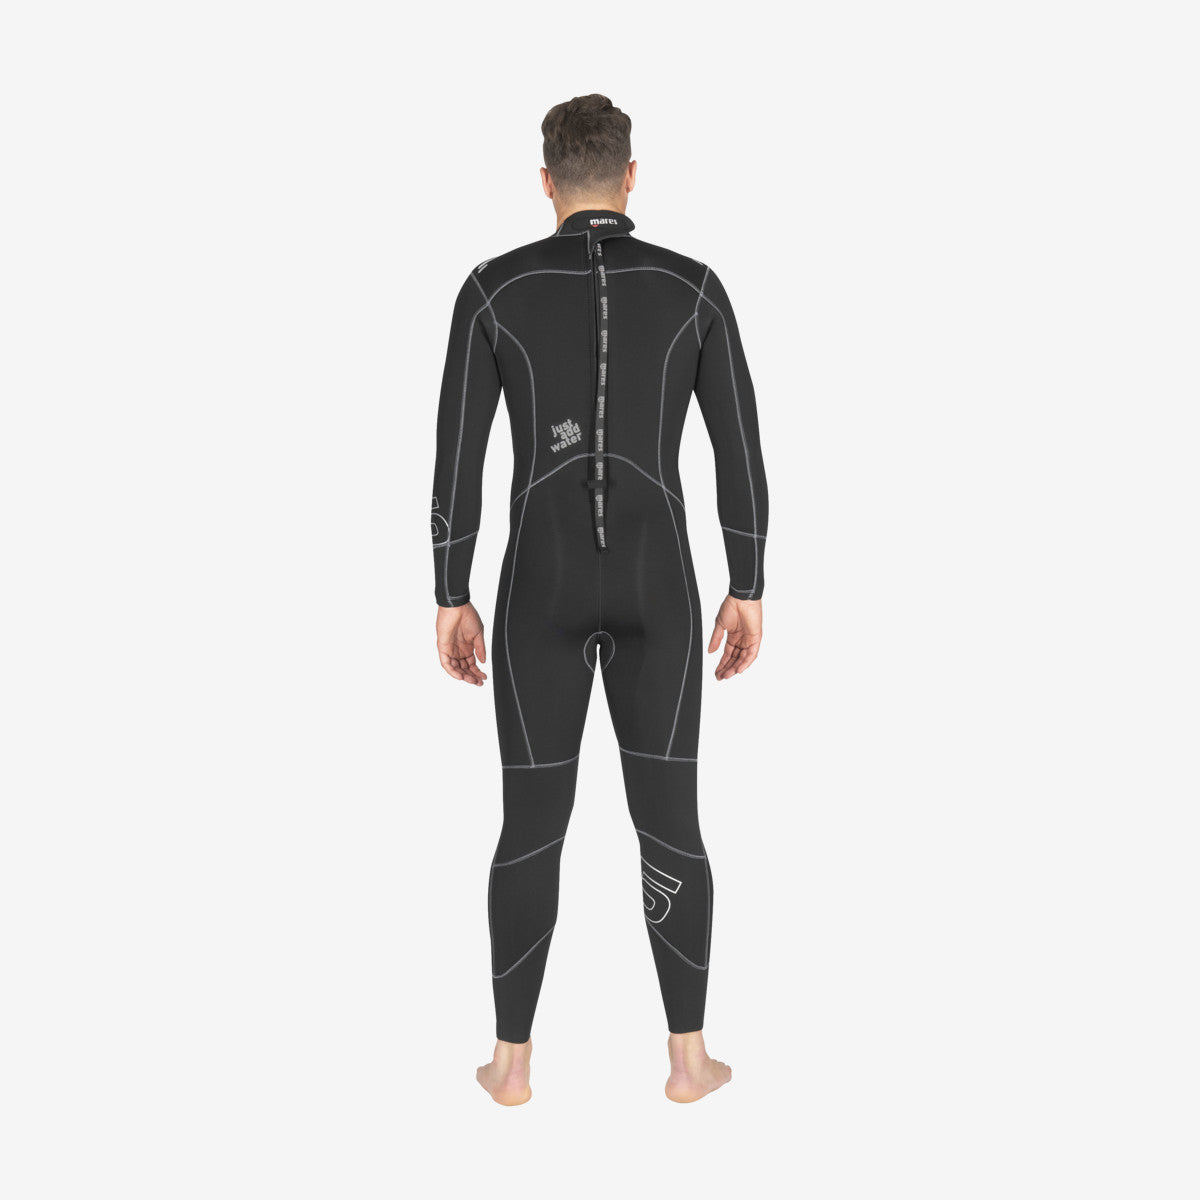 MARES Wetsuit Evolution 5mm Man חליפת צלילה בעובי 5 מ"מ